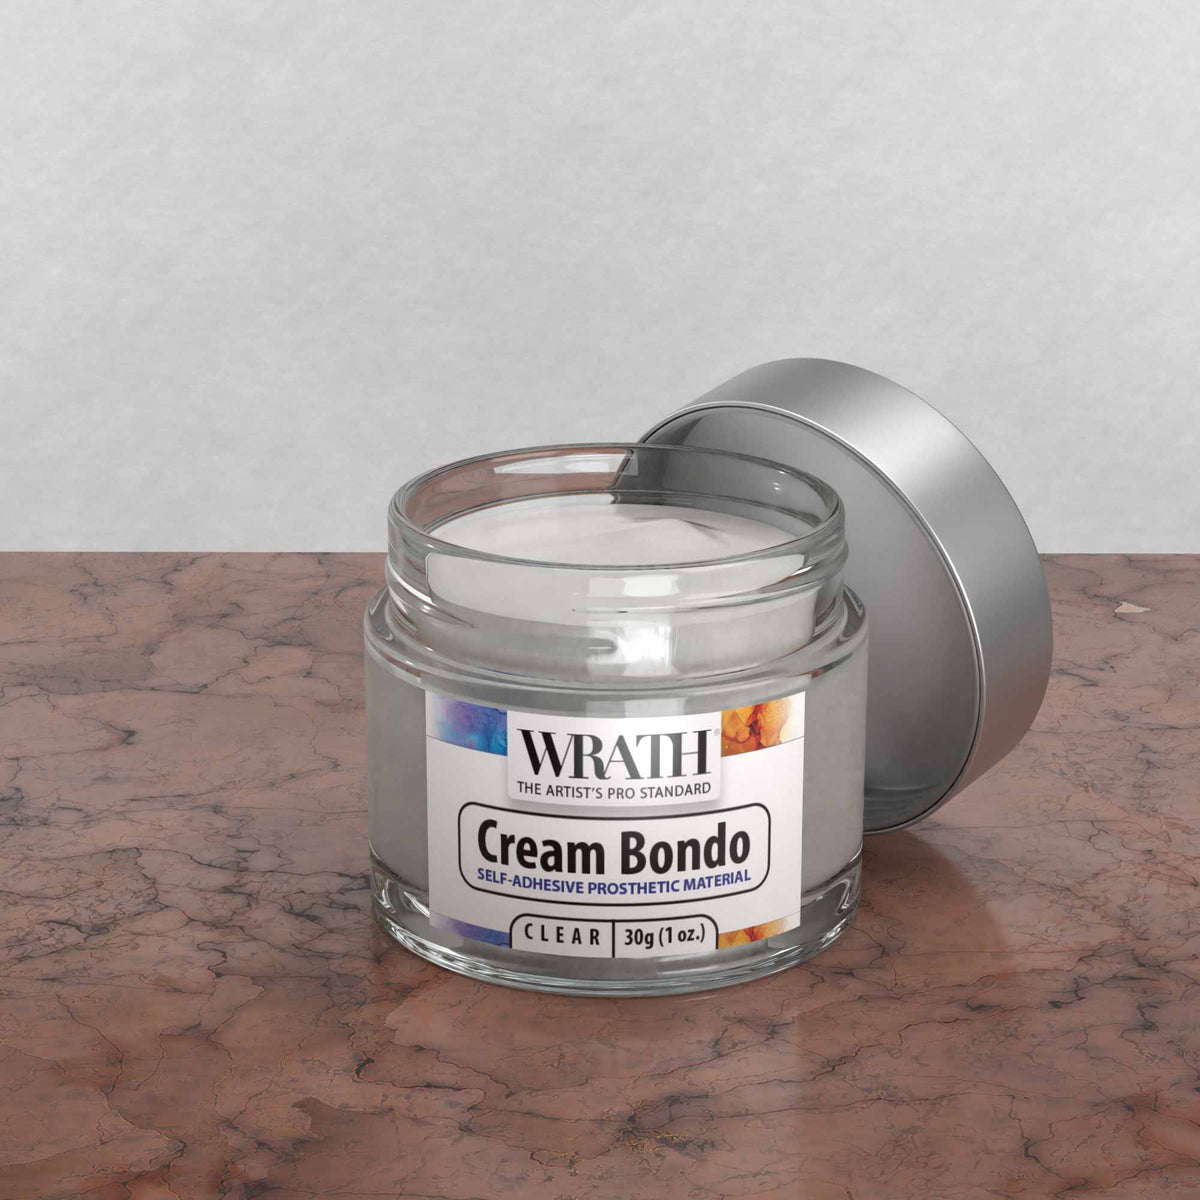 WRATH Cream Bondo - Clear Prosthetic Material